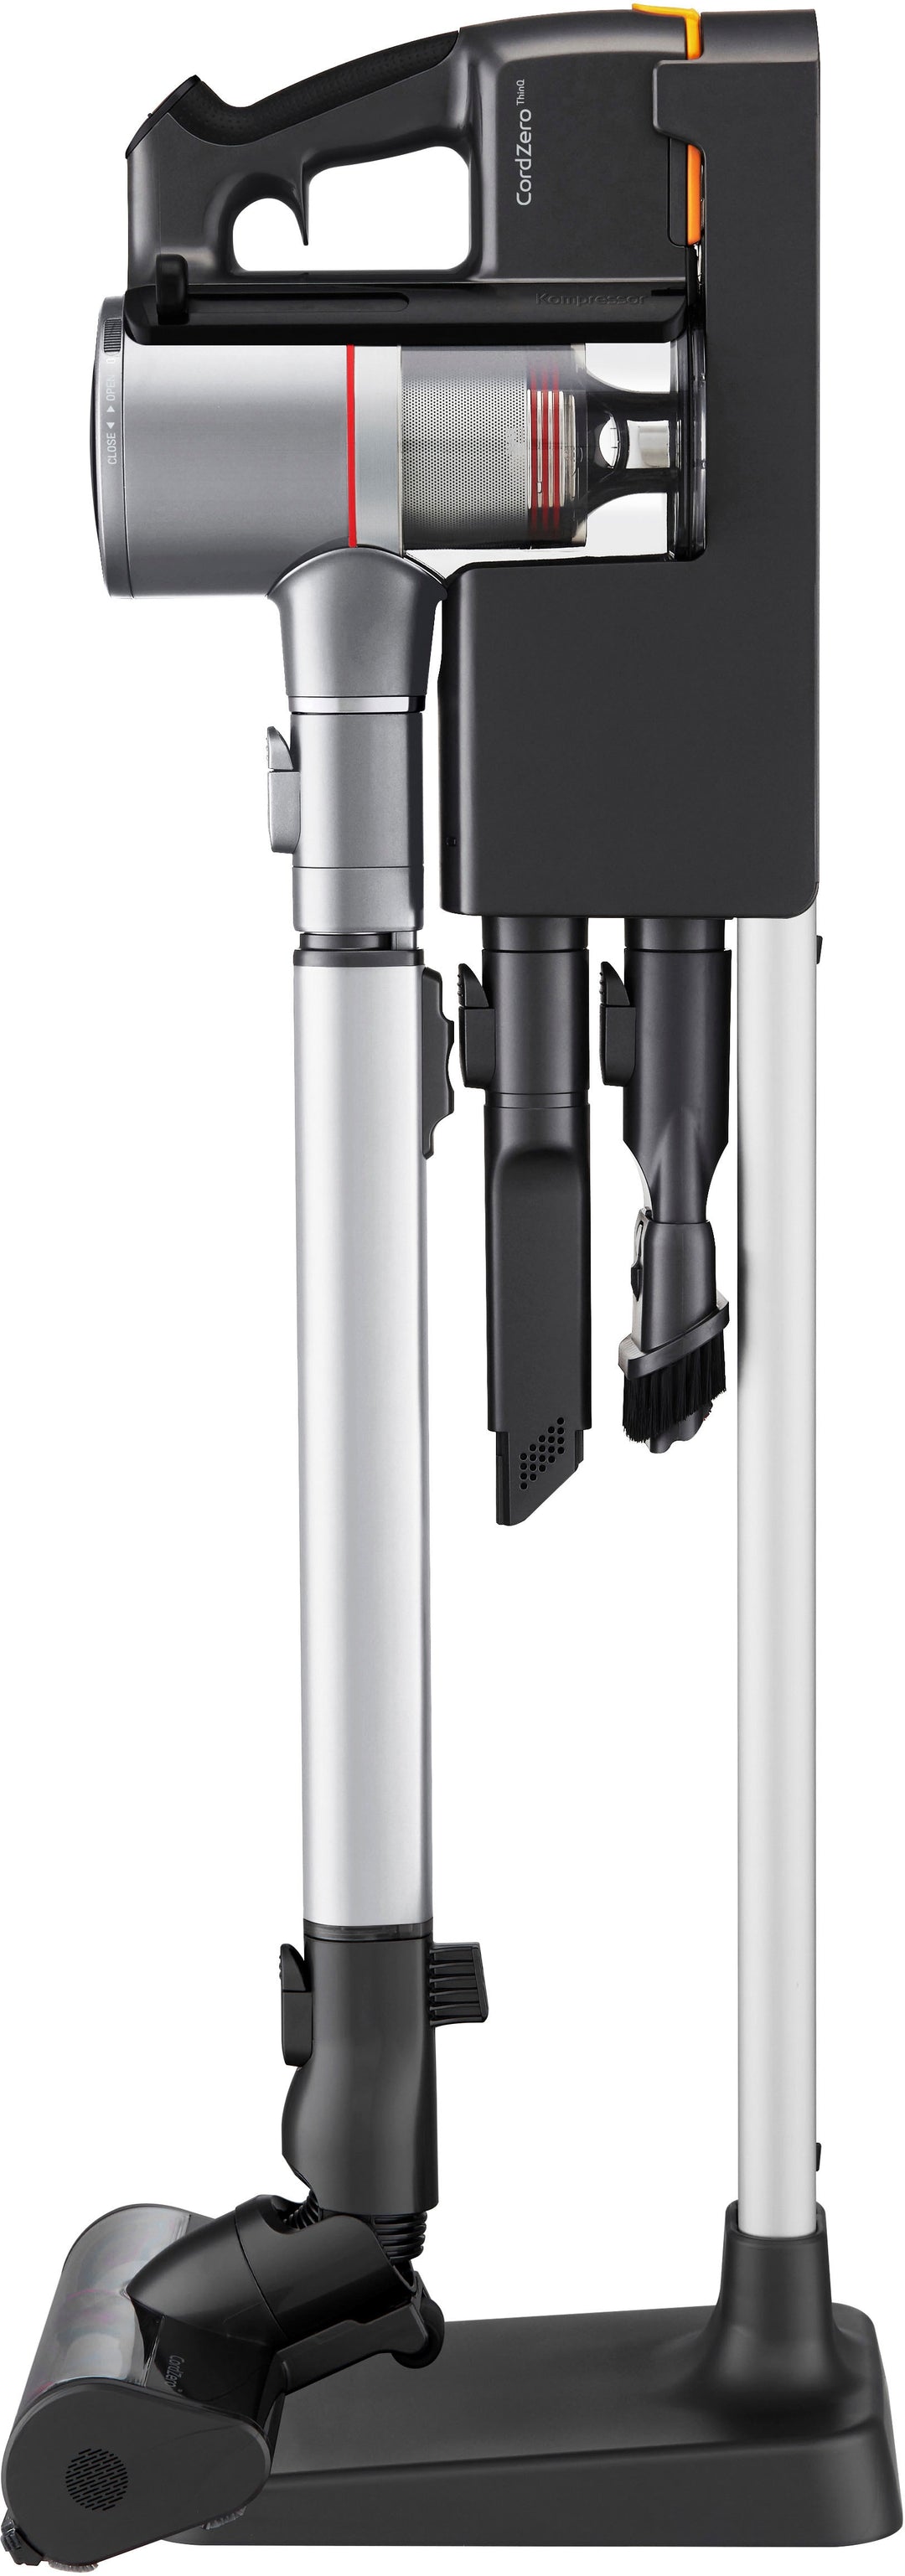 LG - CordZero Cordless Stick Vacuum with Kompressor technology - Matte Silver_8